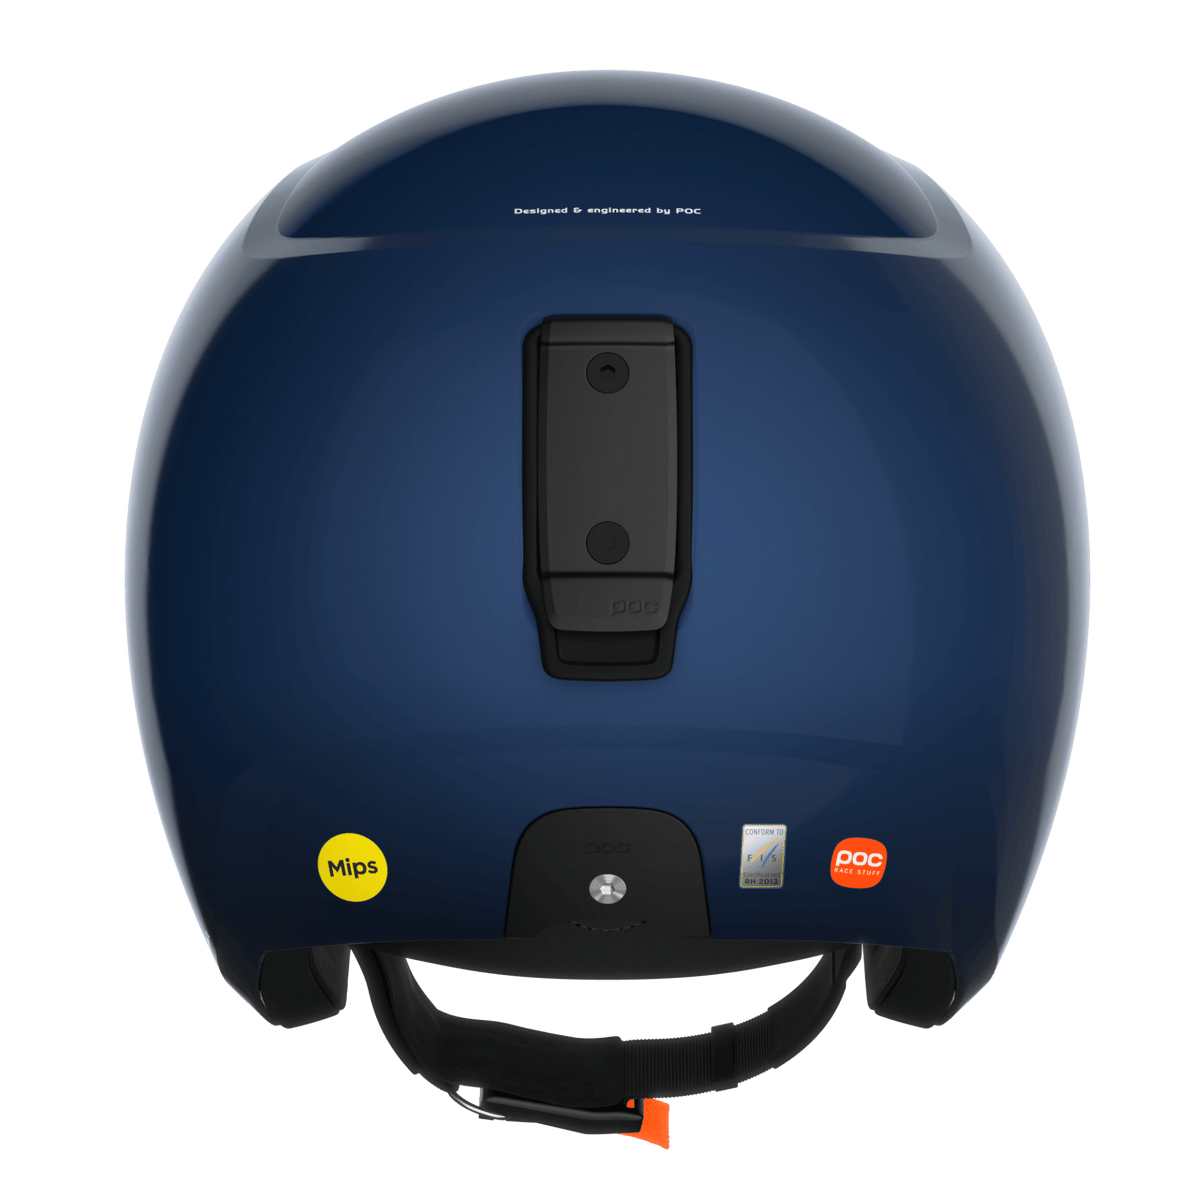 Skull Dura X MIPS Adult Ski Helmet